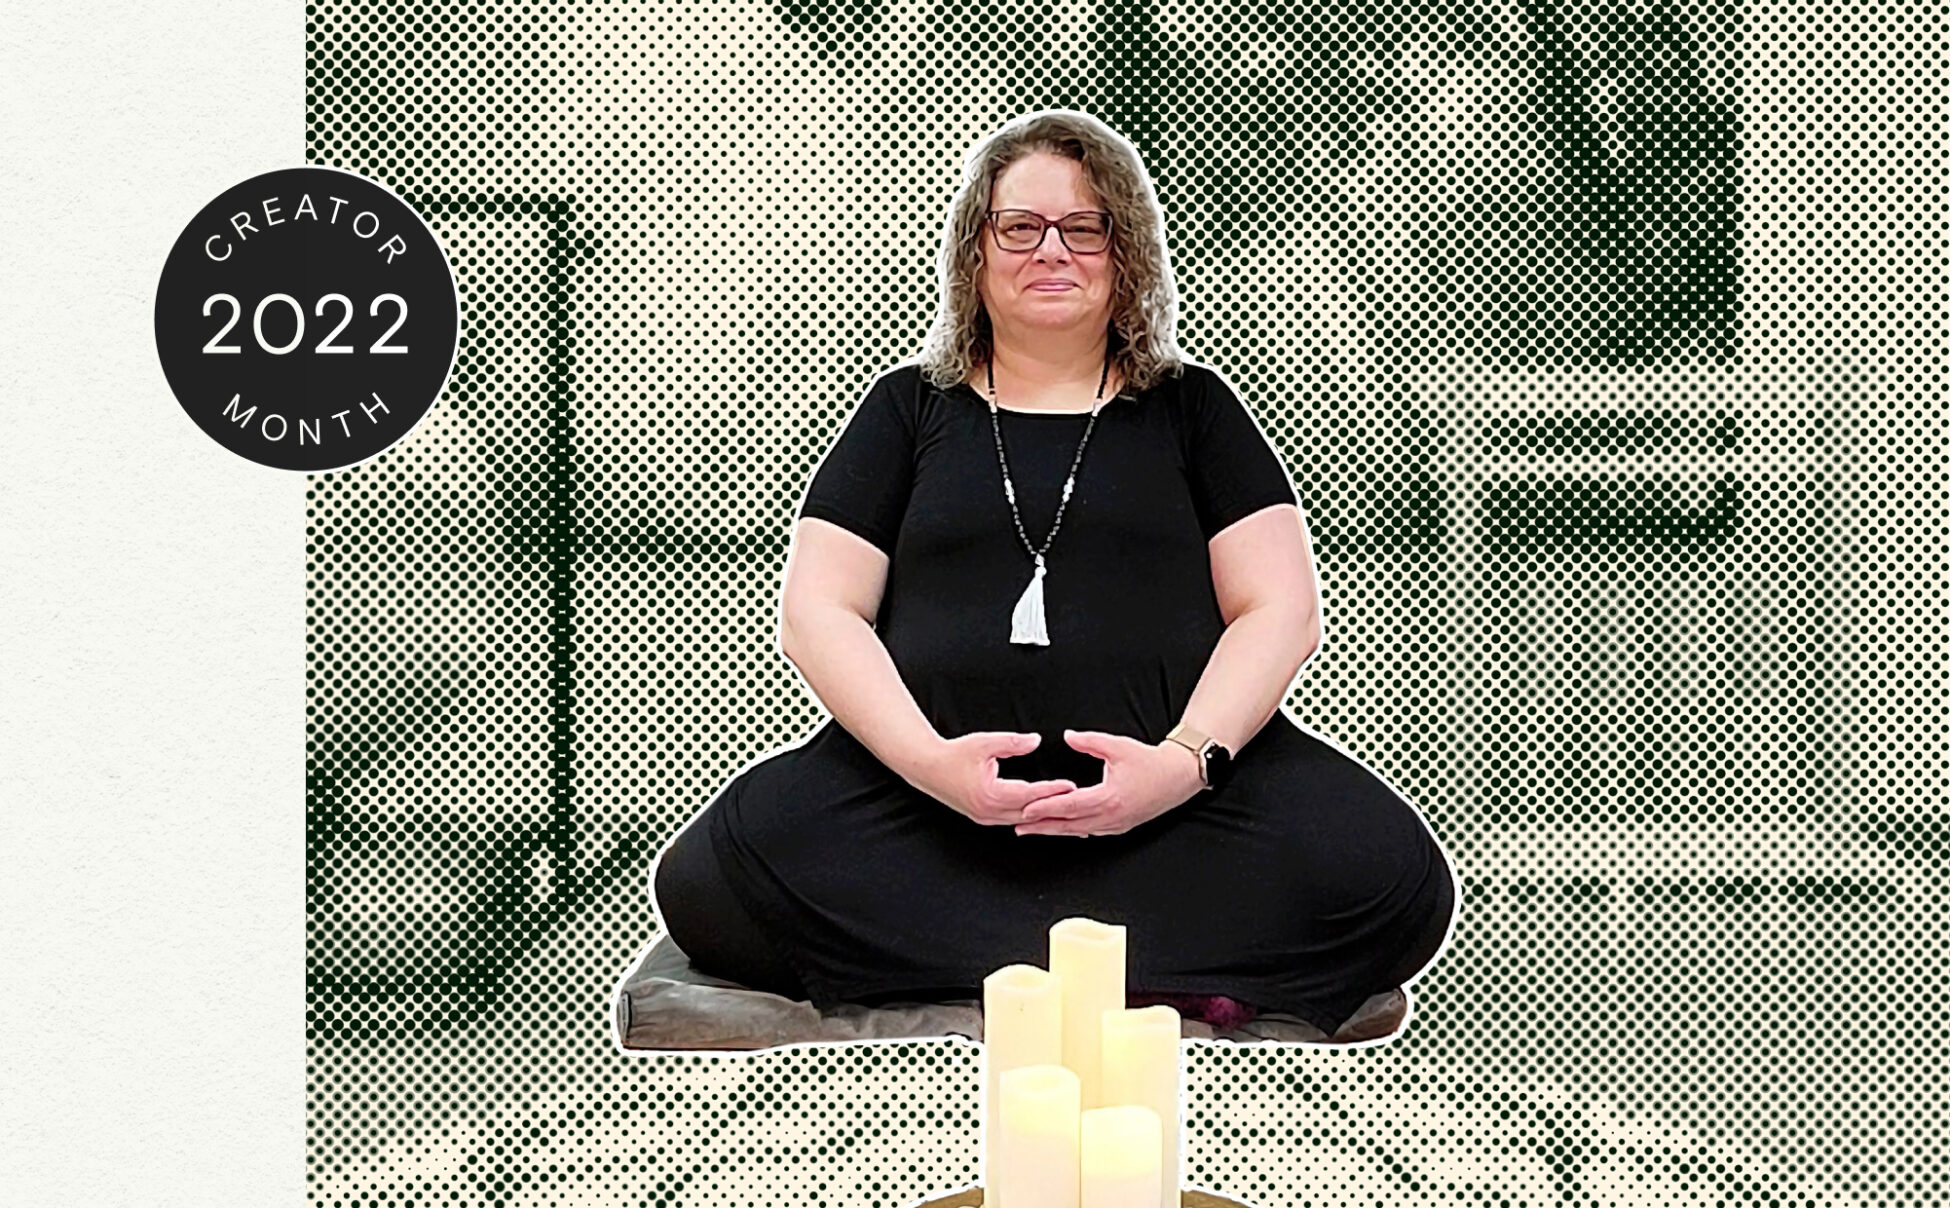 Creator Deb Phelps walks us through a guided mindfulness meditation